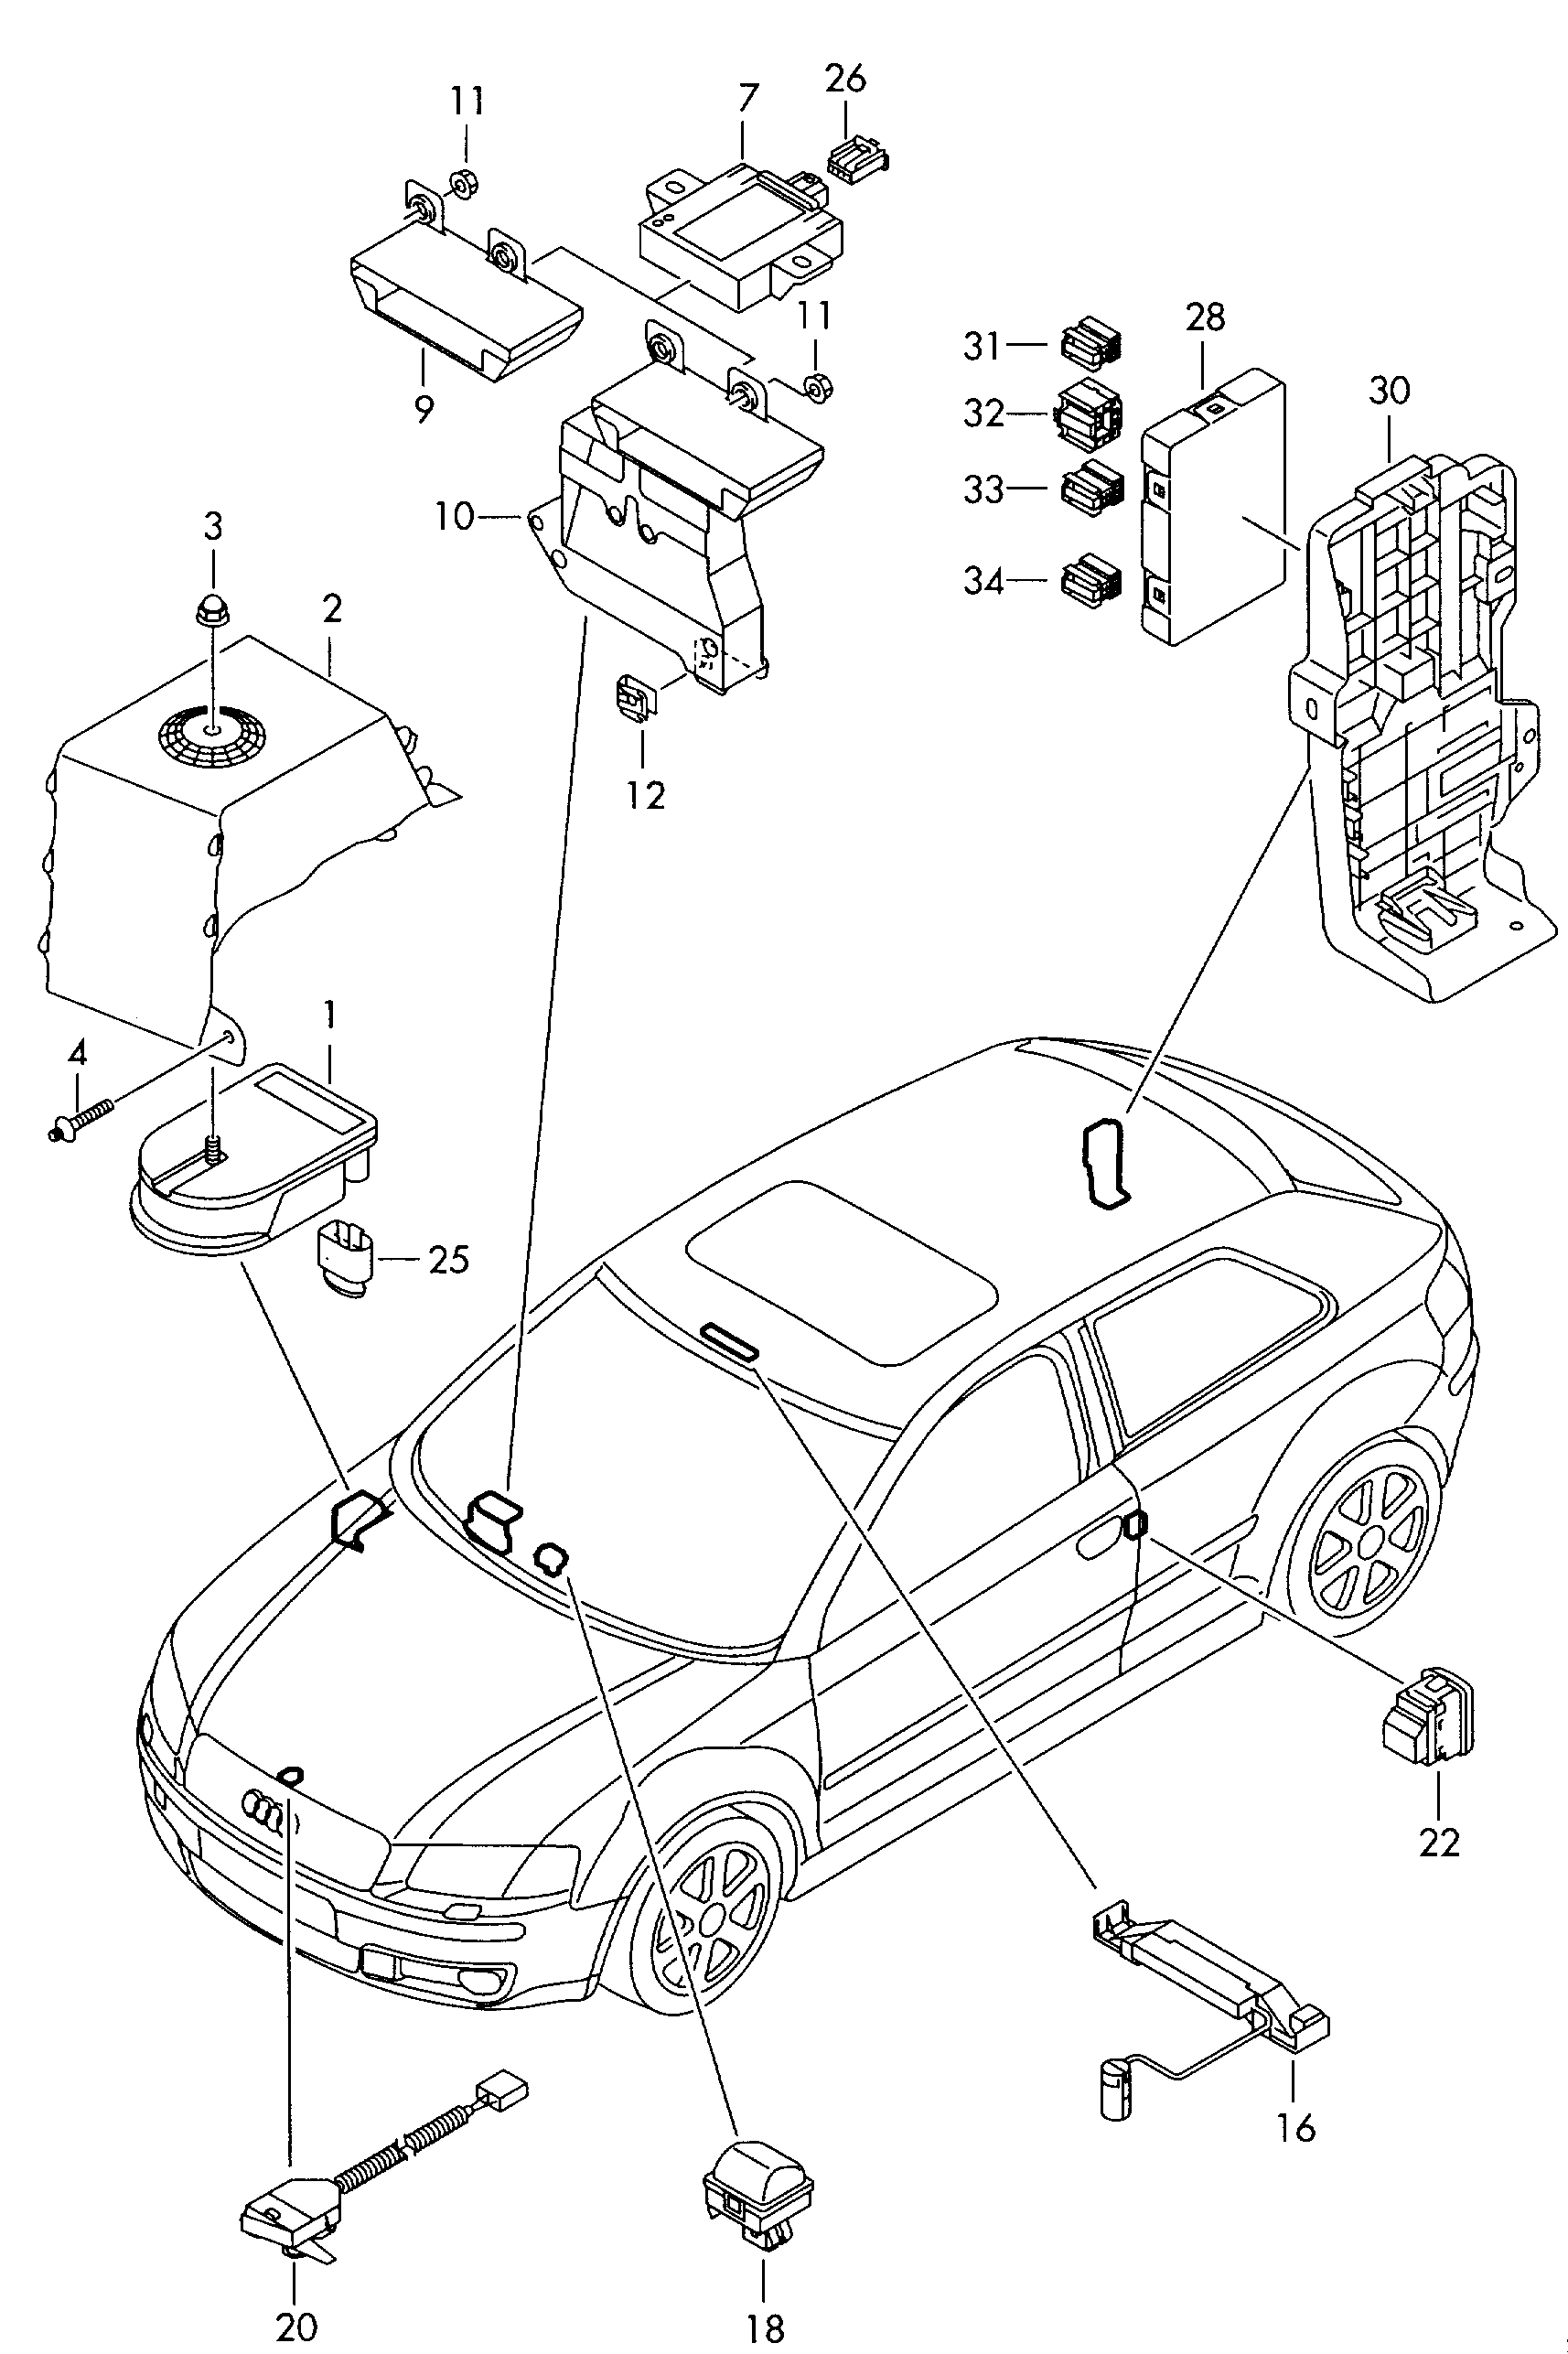 centralni ridici jednotka
pro system komfort - Audi A3/S3/Sportb/qu.(A3)  